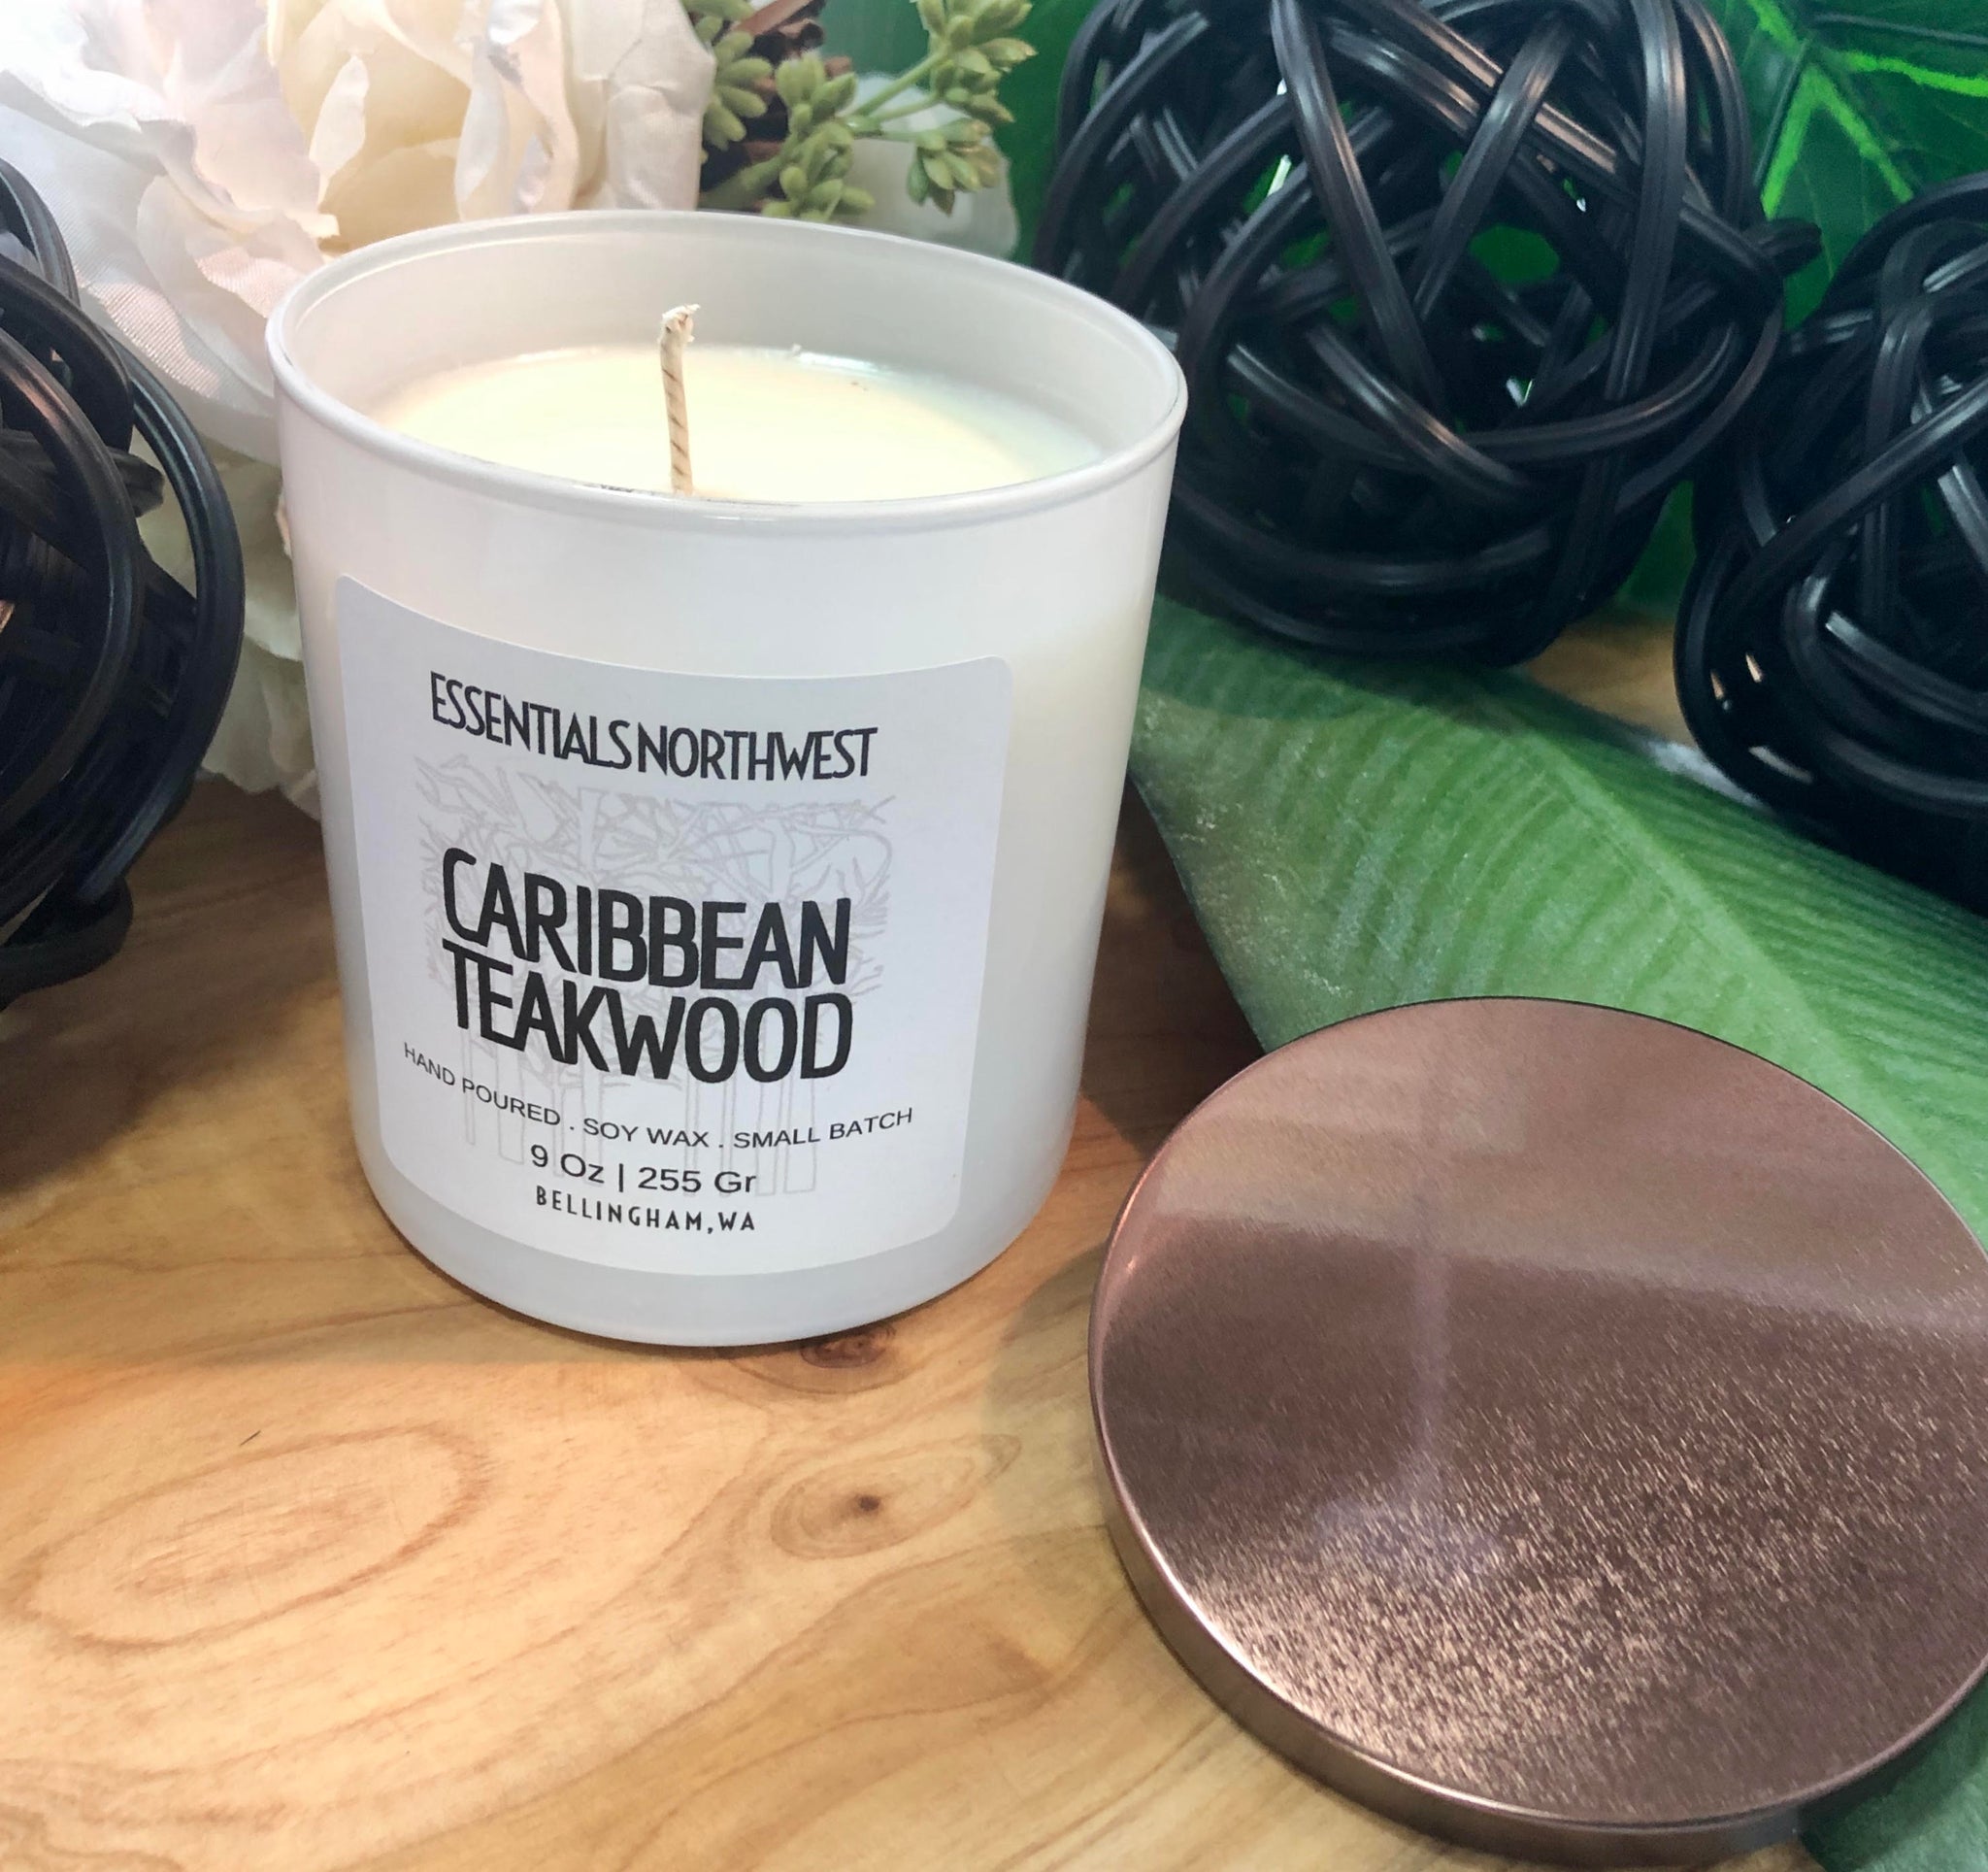 Caribbean Teakwood Candle – Essentials NorthWest